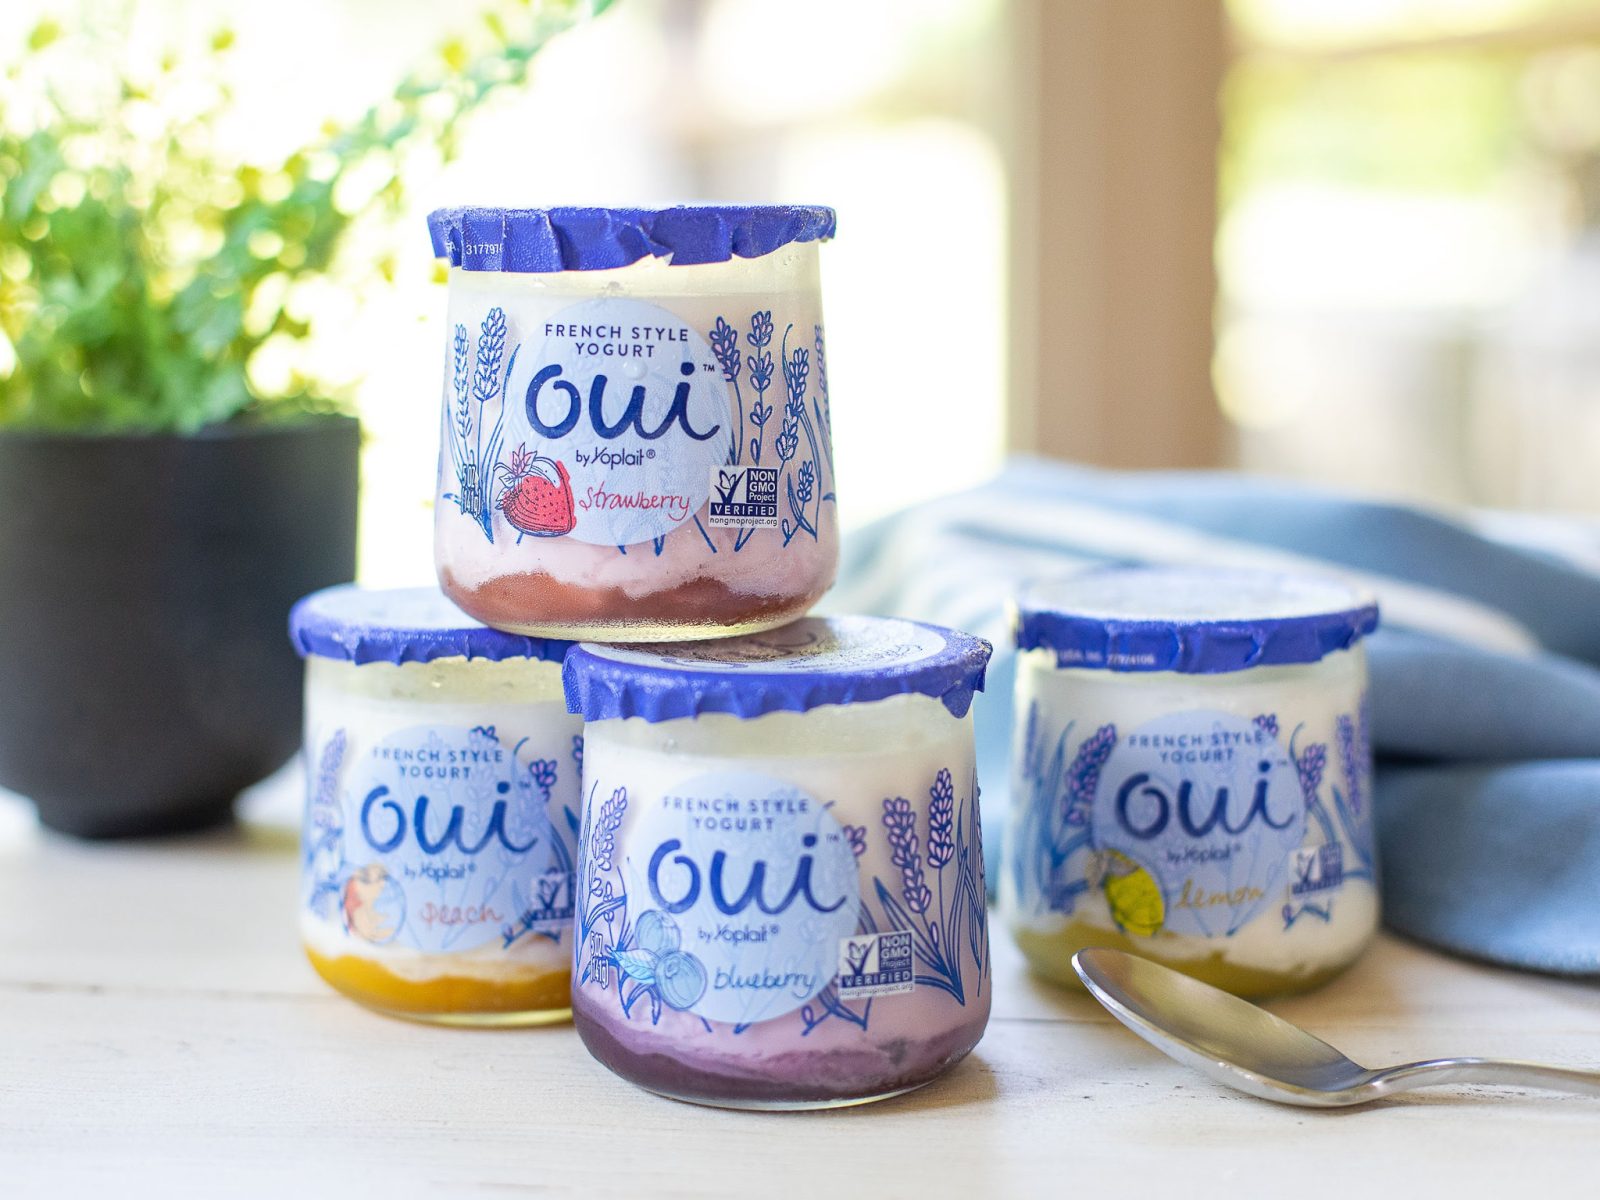 Oui by Yoplait French Style Yogurt Just $1.08 Per Jar At Publix